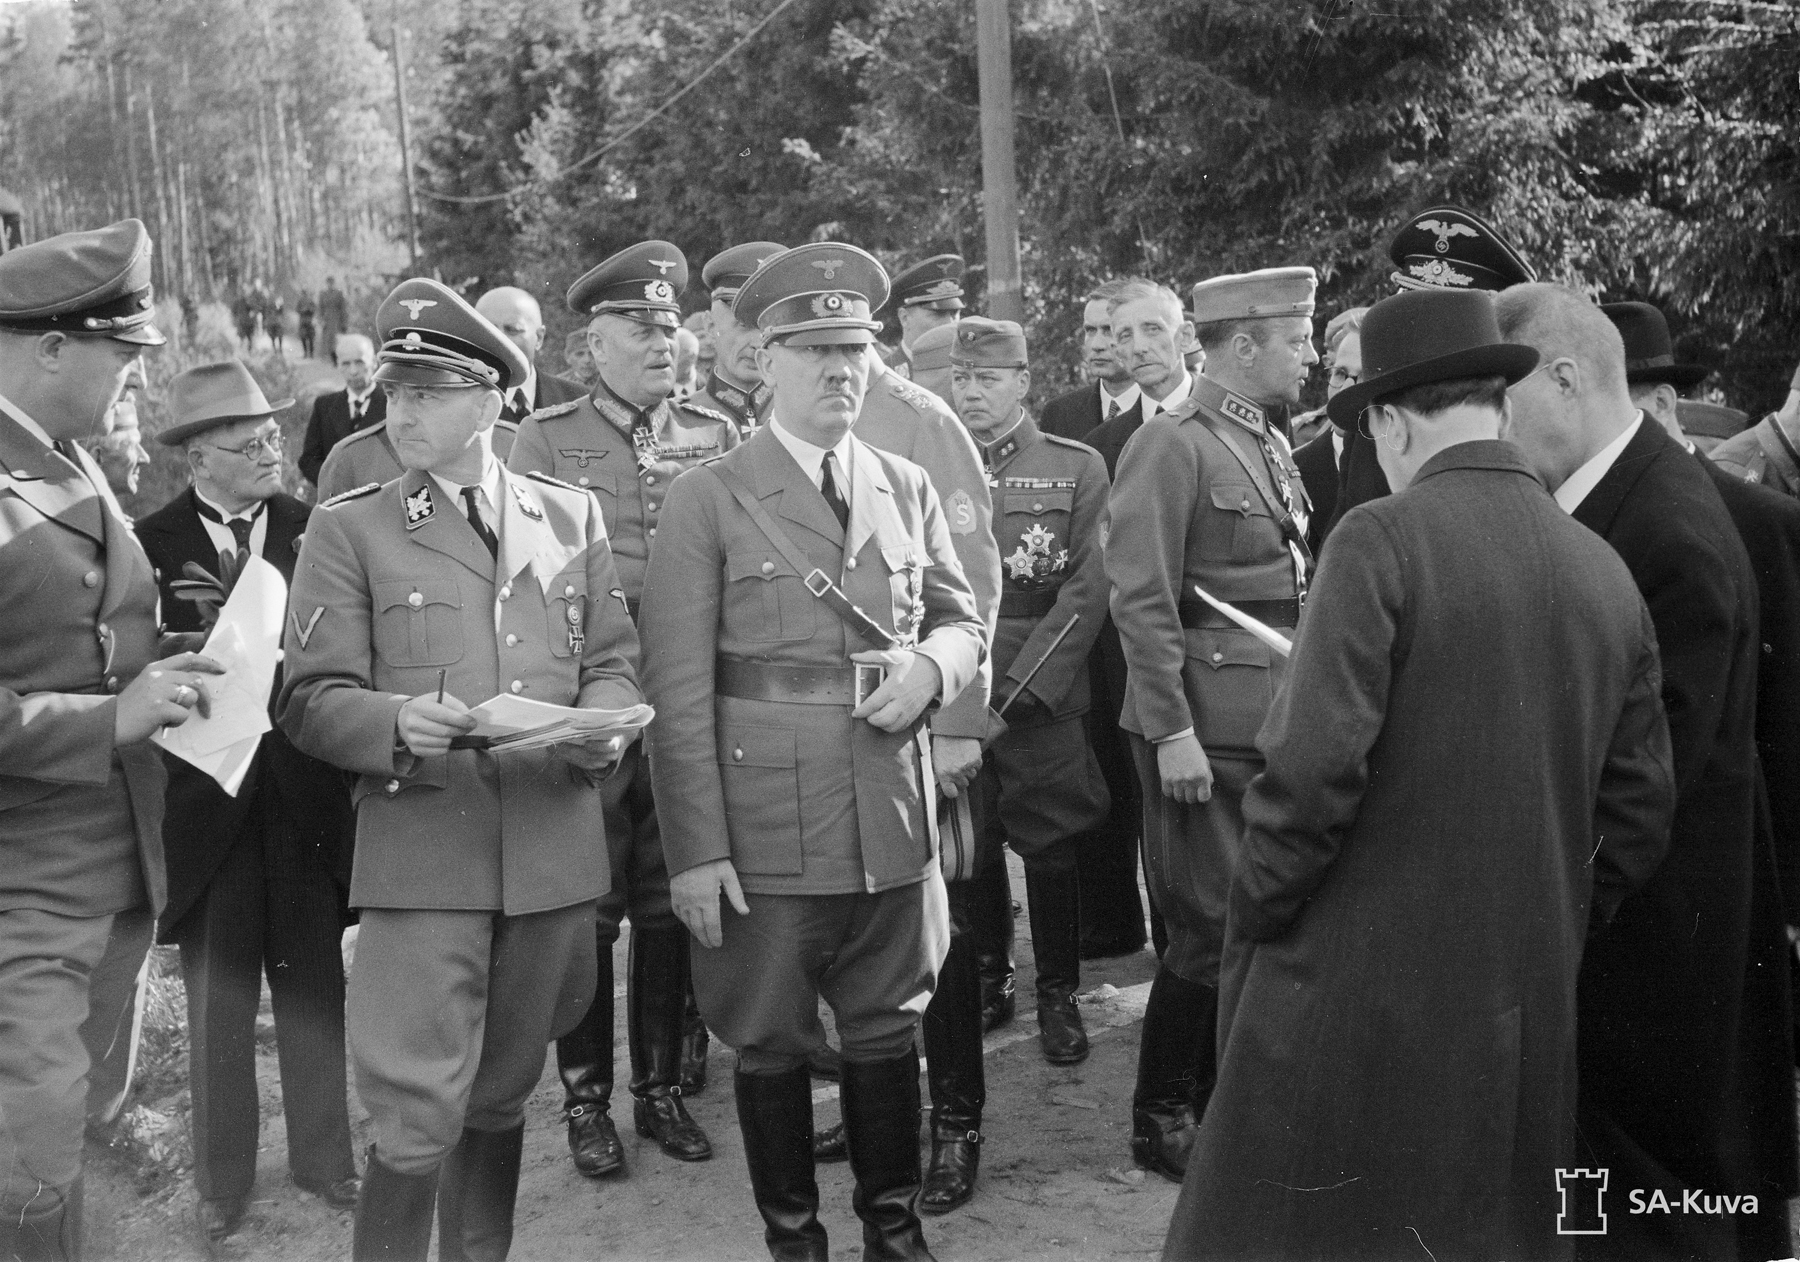 Visit of Adolf Hitler in Finland for the 75th birthday of Mannerheim